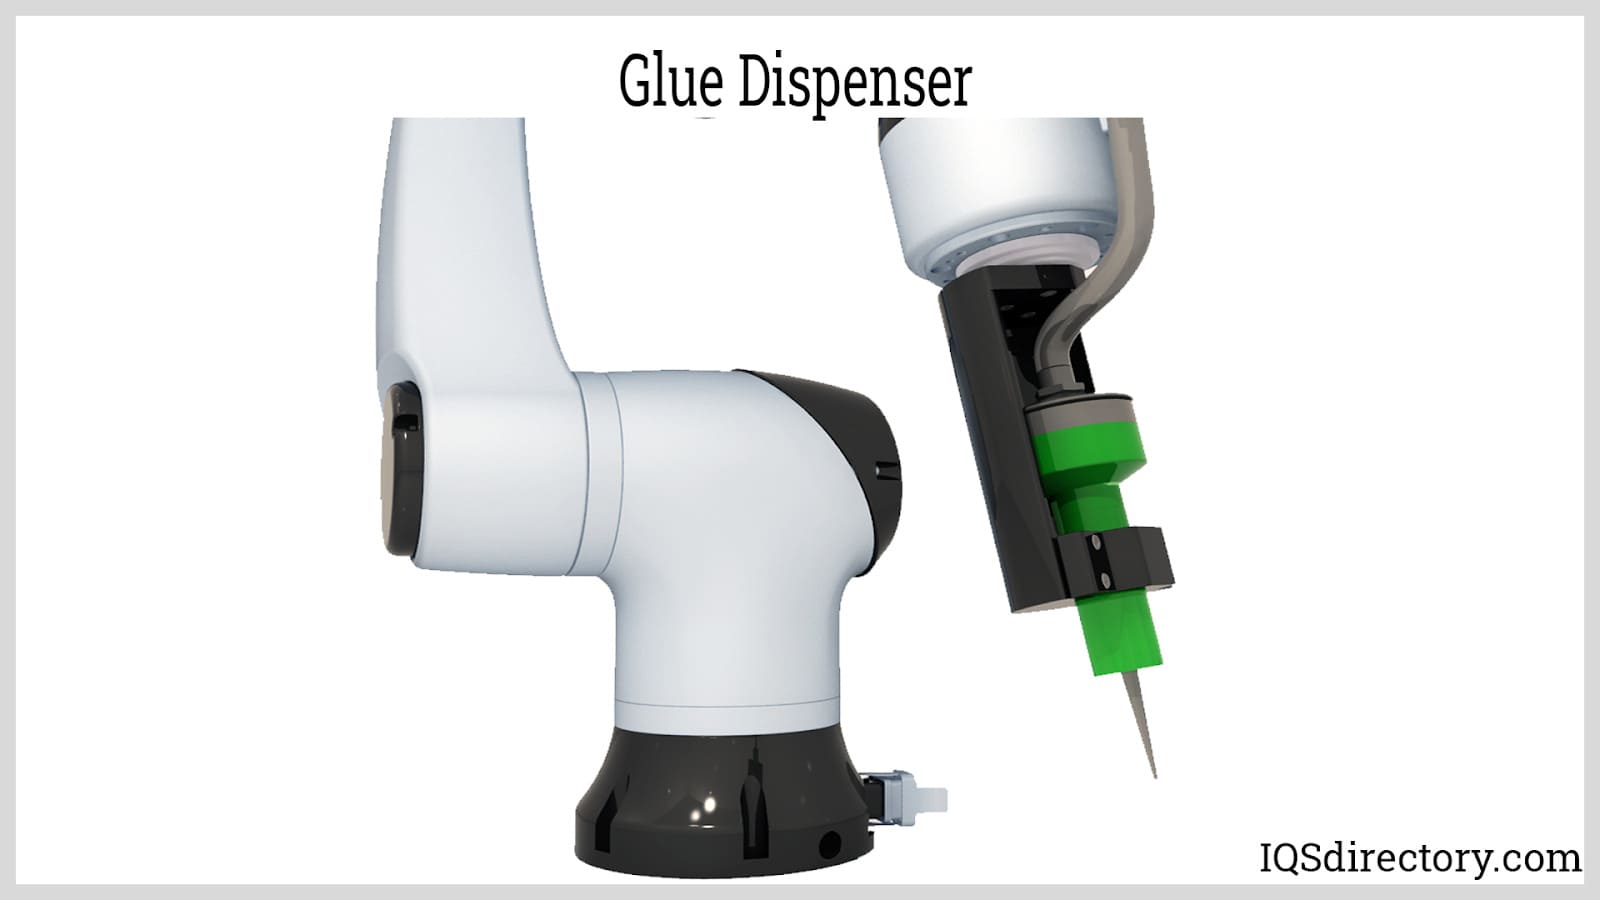 Glue Dispenser